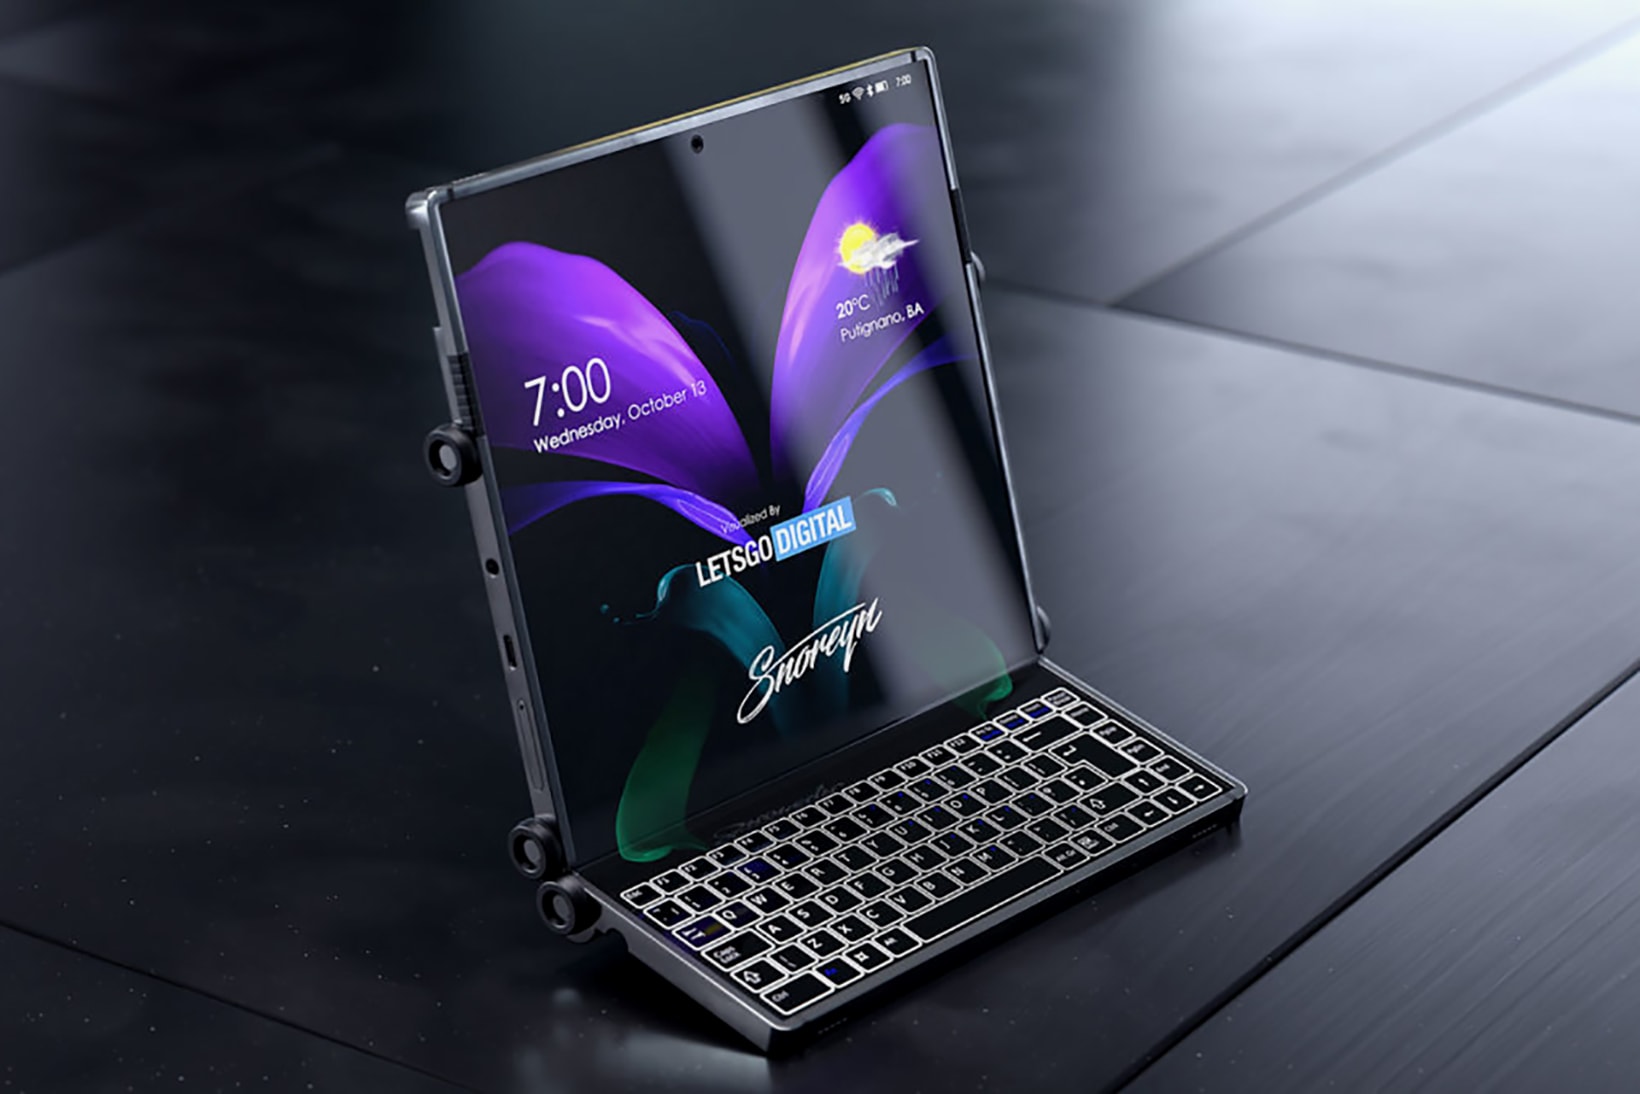 samsung galaxy z dual fold 5g tablet smartphone phone foldable screen tech